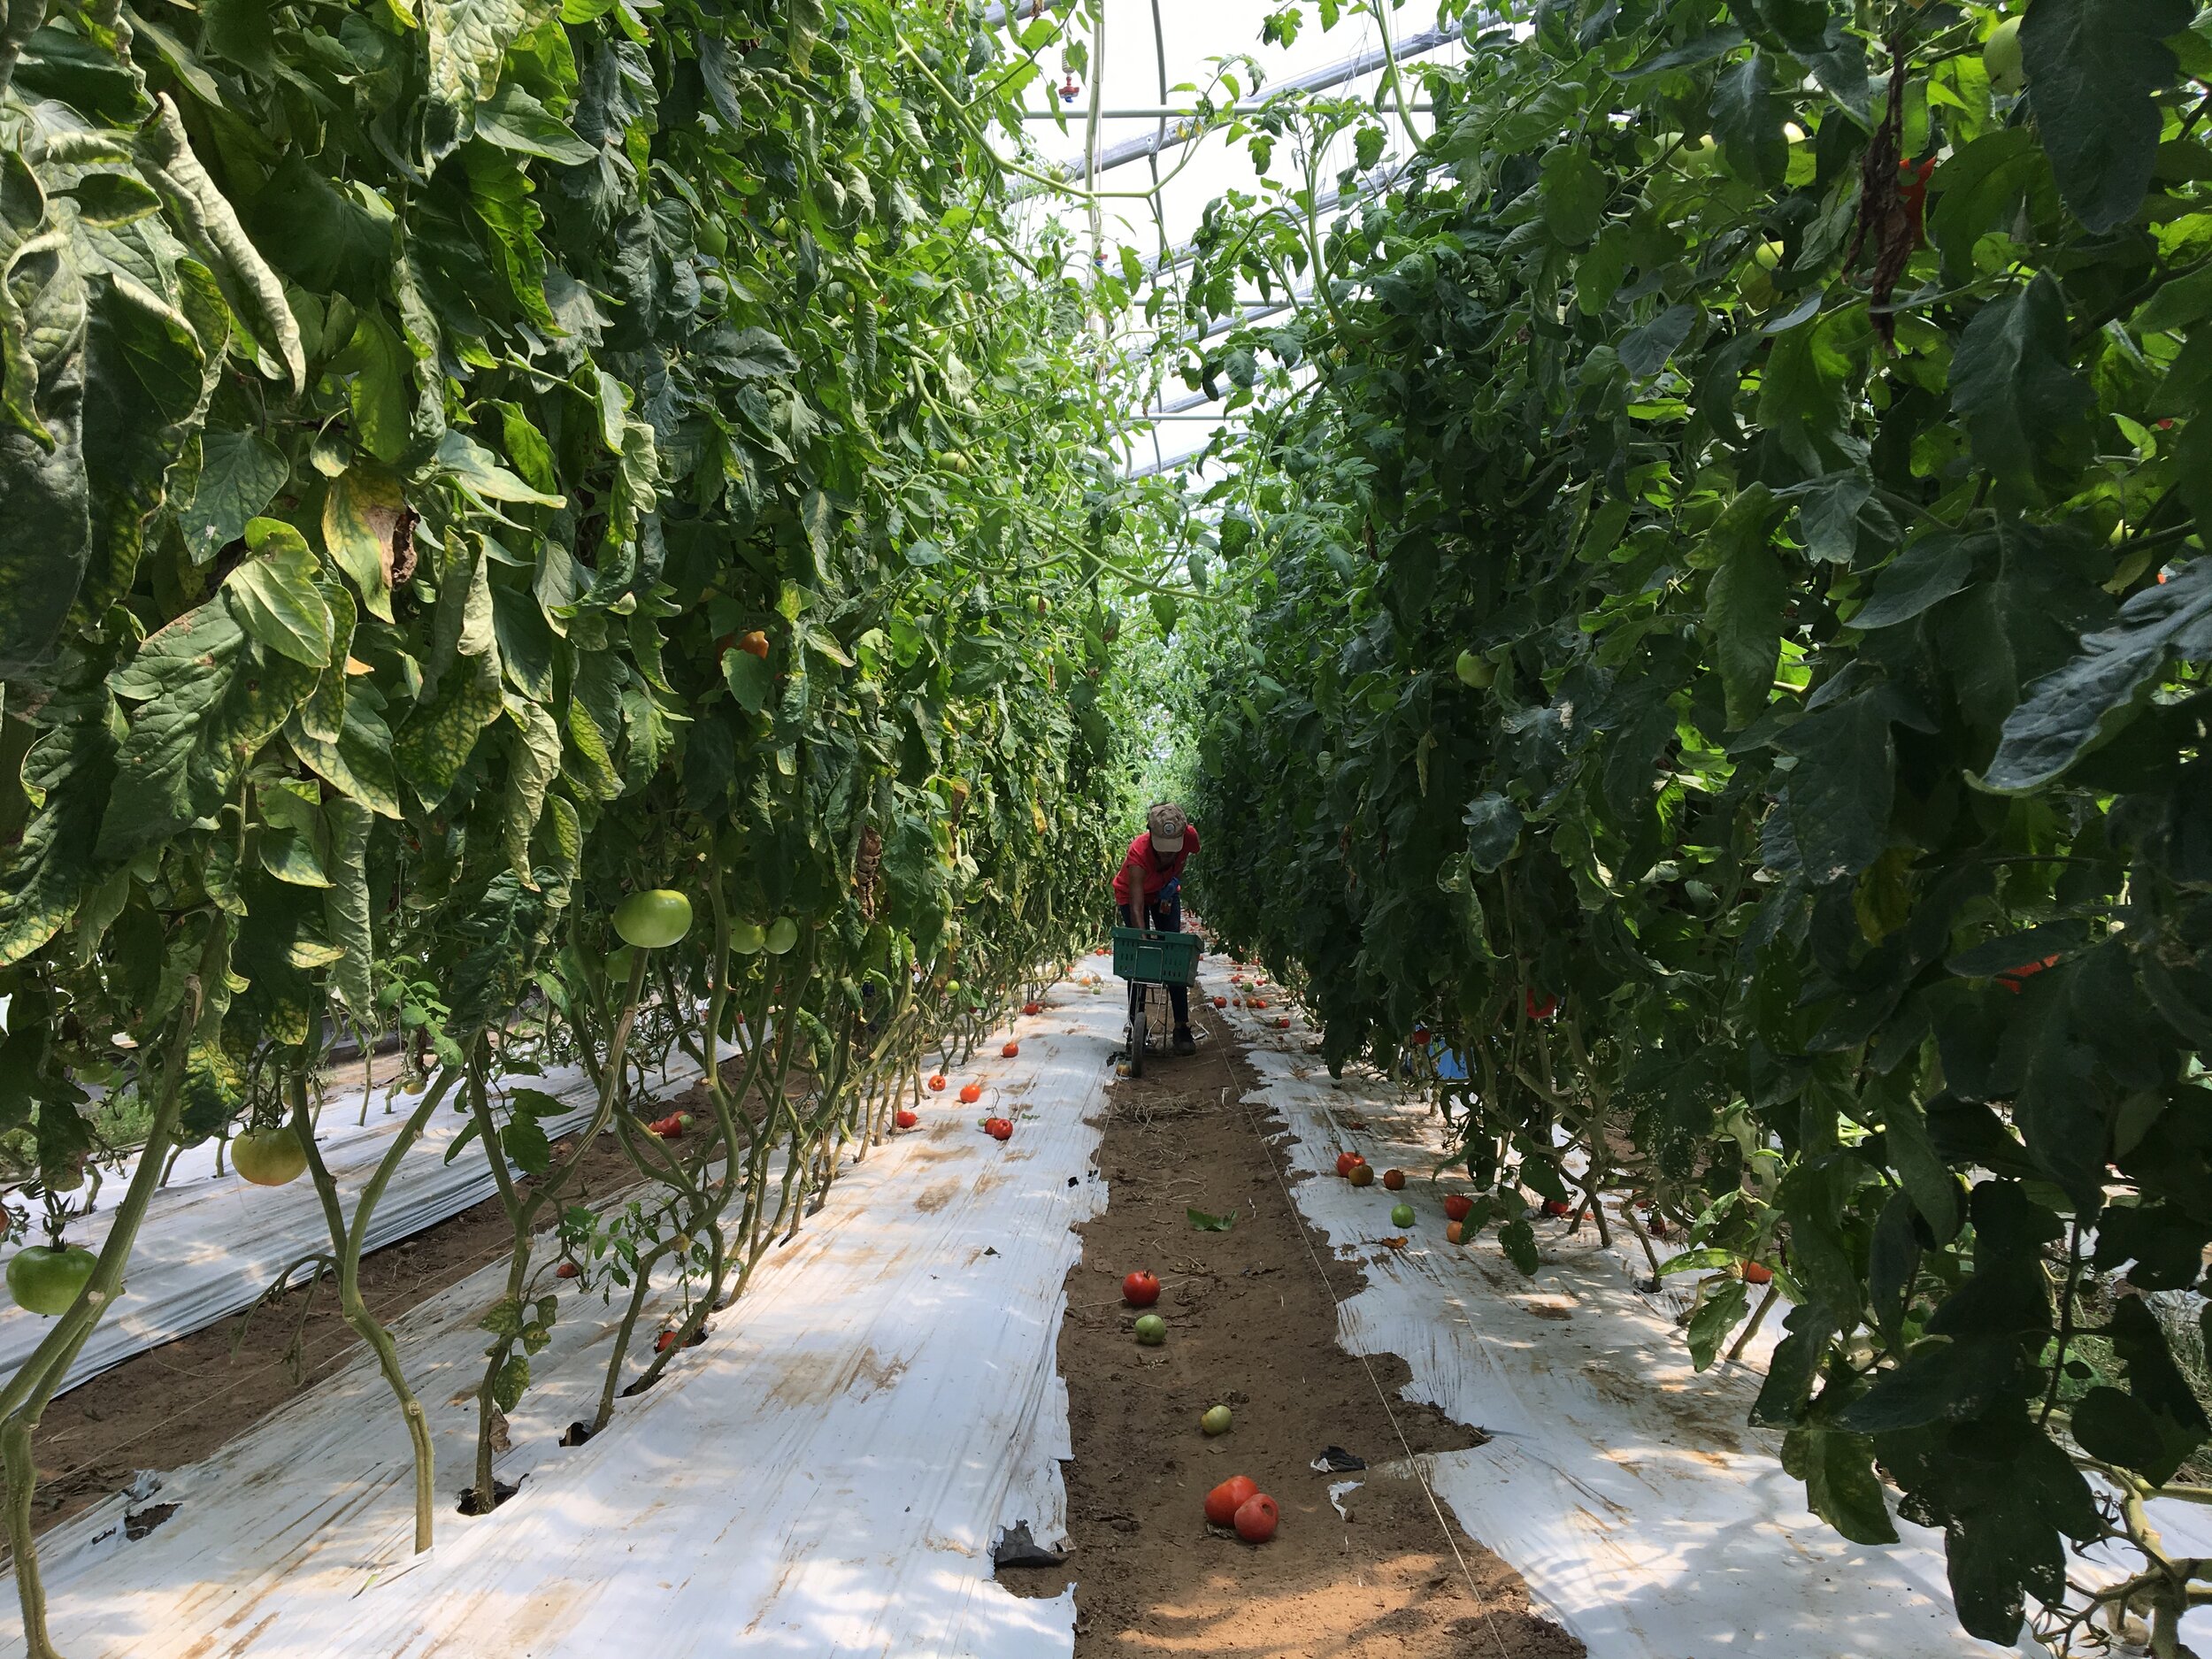 Tunnel Full of Tomato Plants